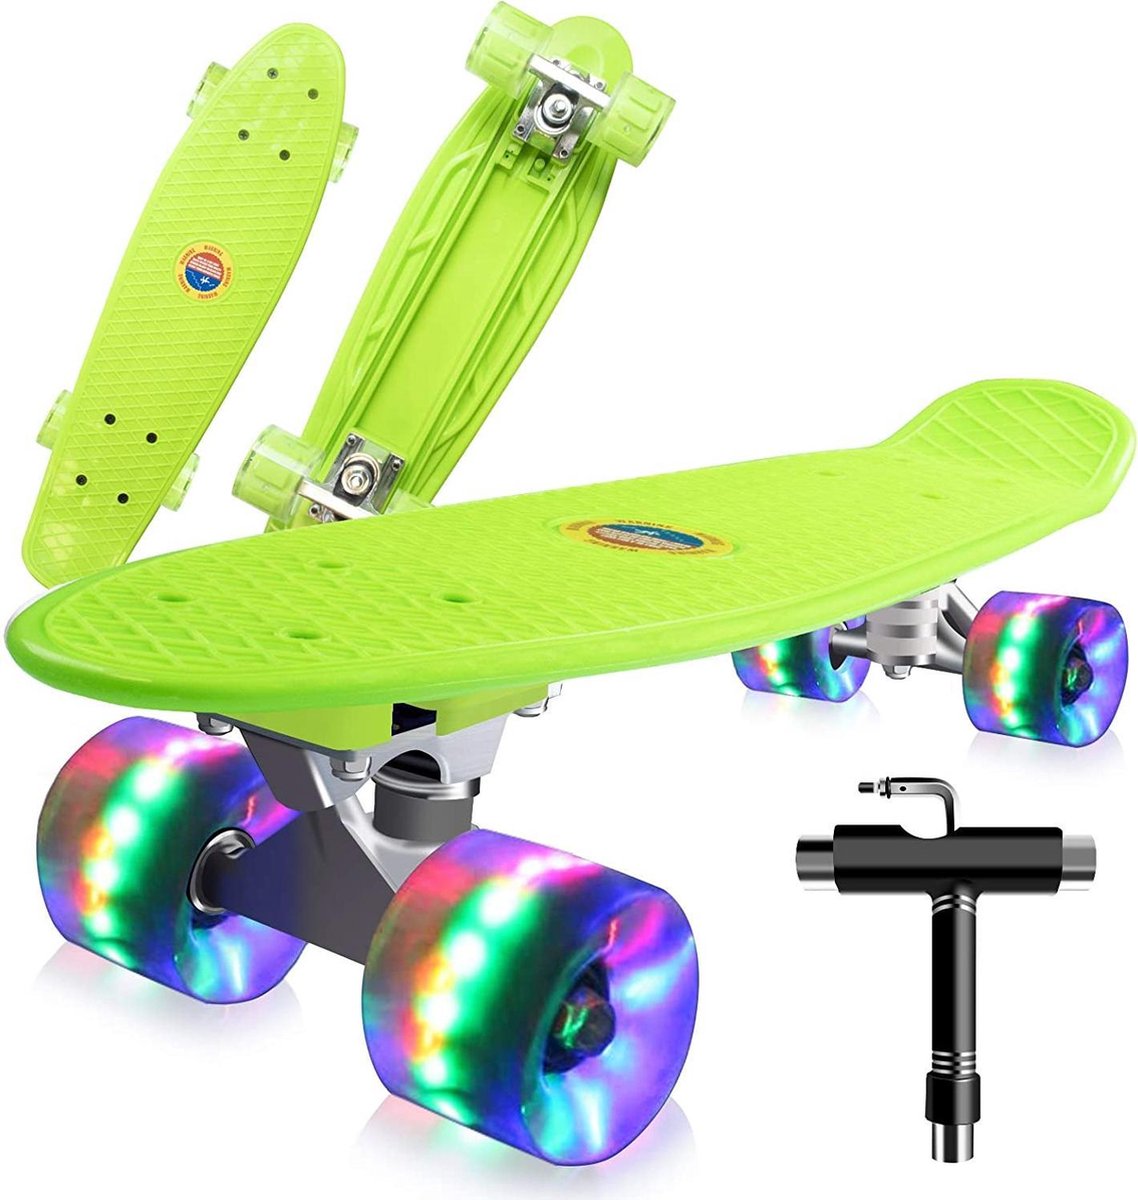 Skateboard Complet Mini Cruiser Skateboard Pour Enfants